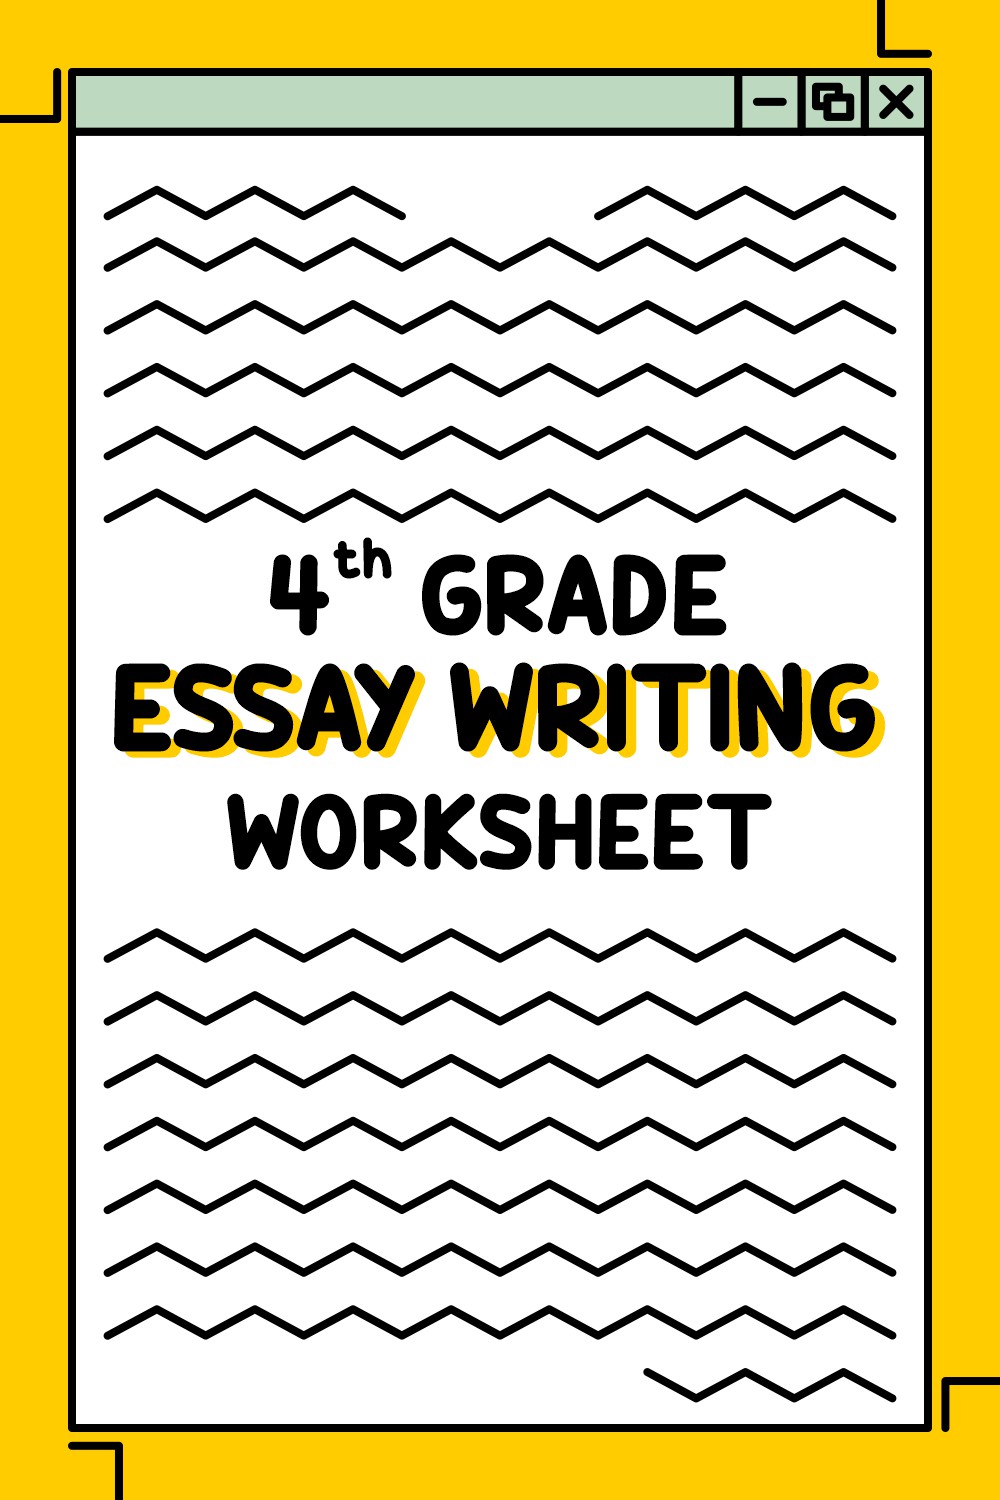 4th Grade Essay Writing Worksheets